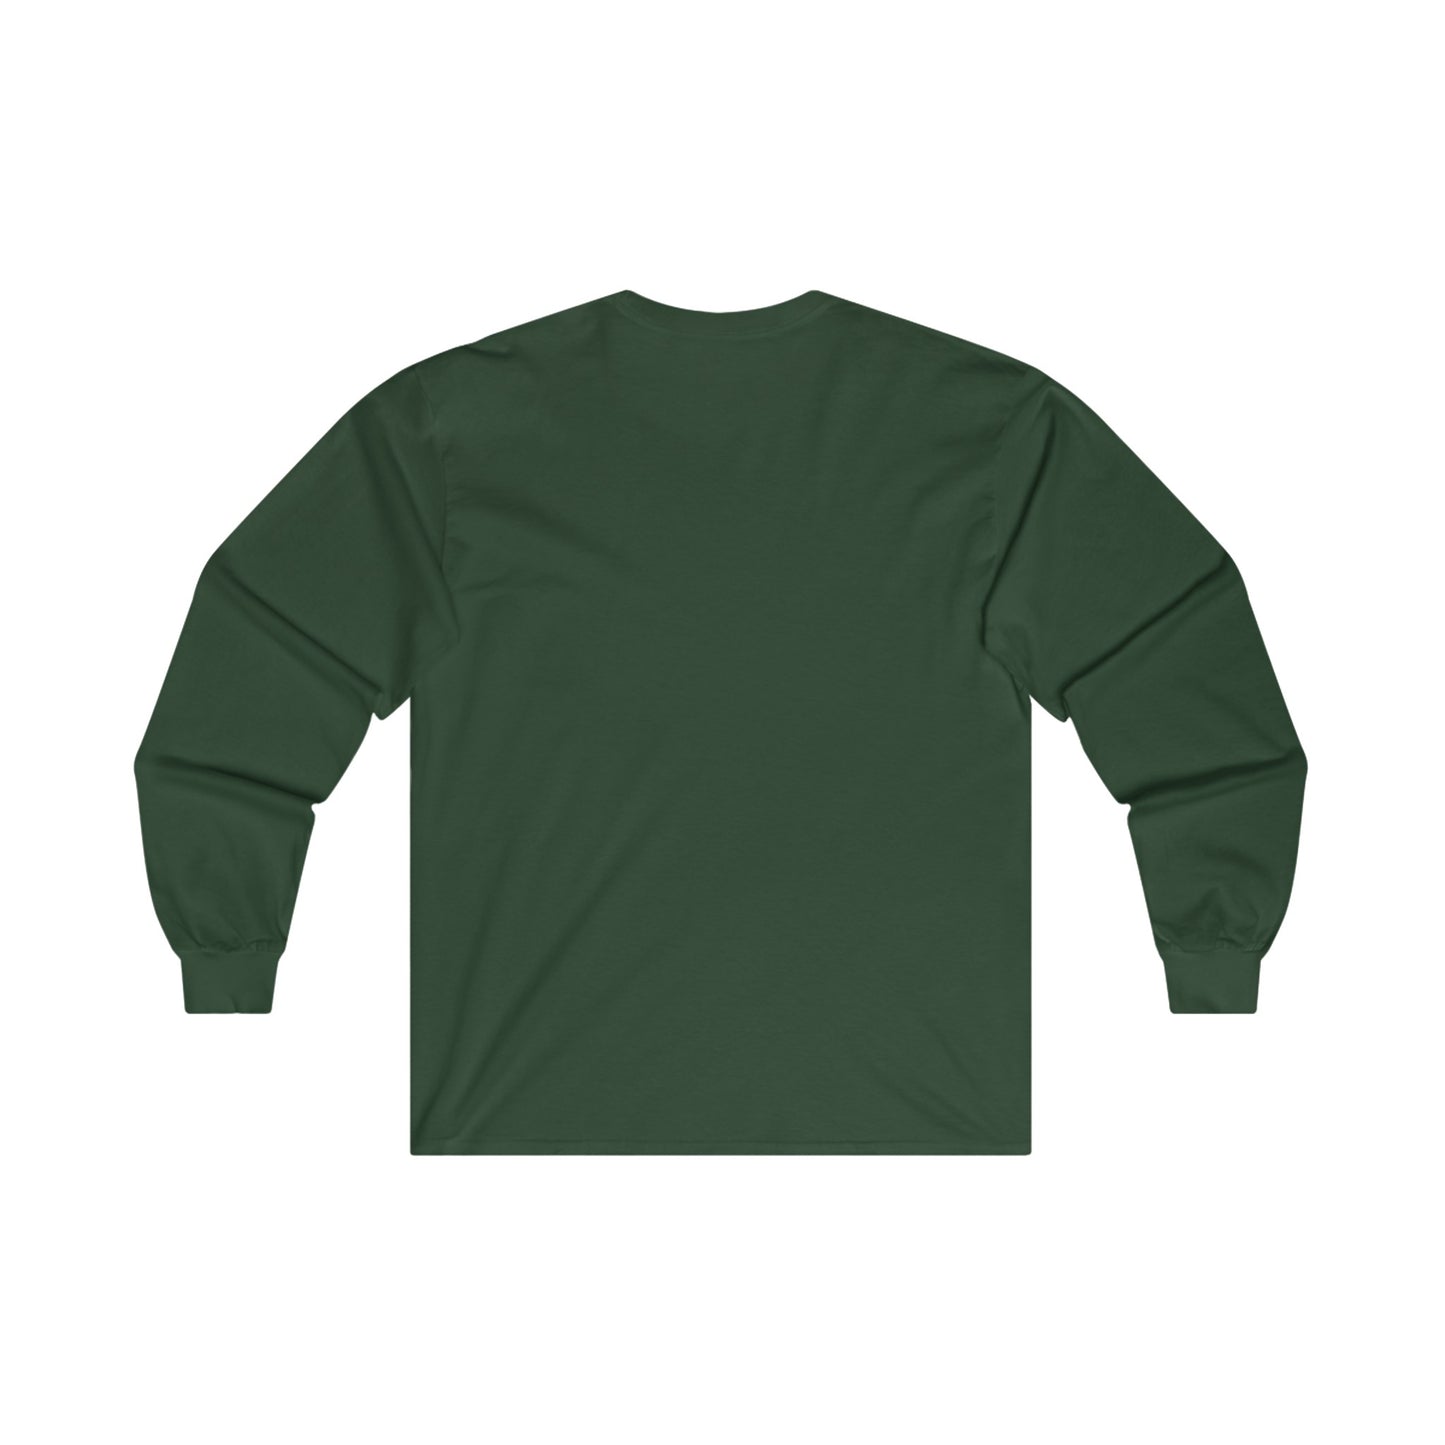 Team Bear - I Choose the Bear Unisex Ultra Cotton Long Sleeve Graphic Tee Shirt | 3 Colors | Hyperbole Design